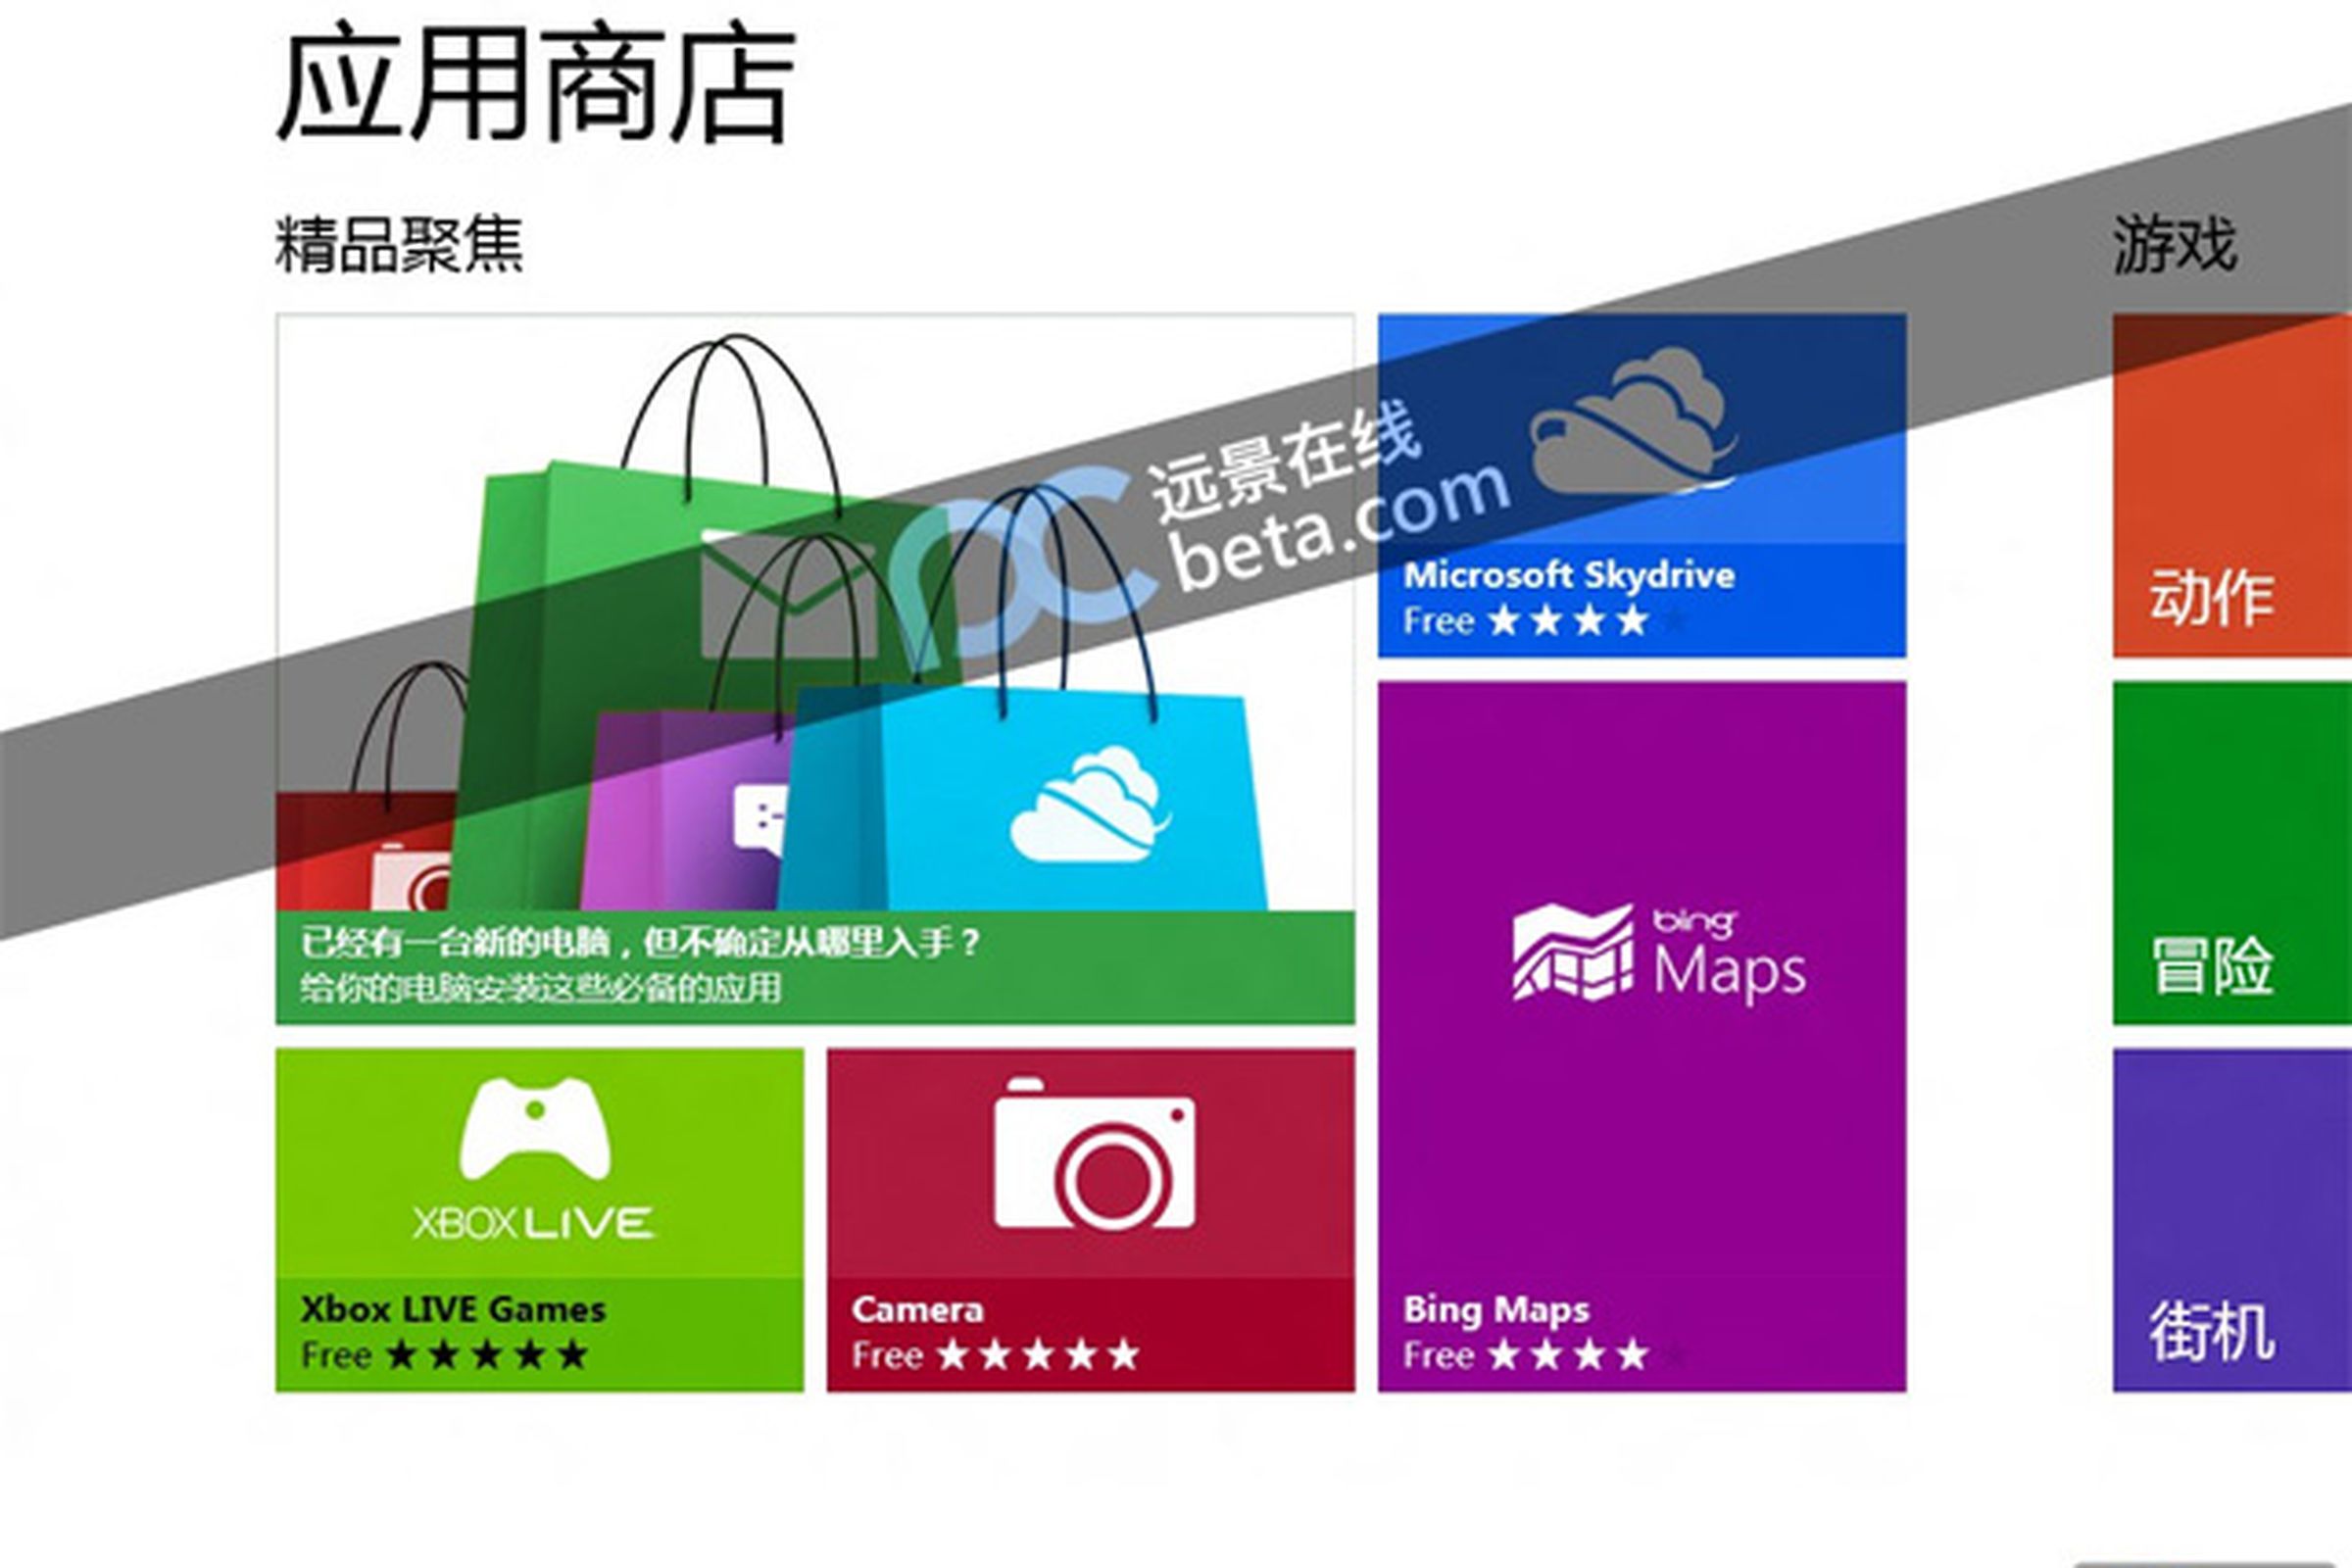 Windows Store Bing Maps